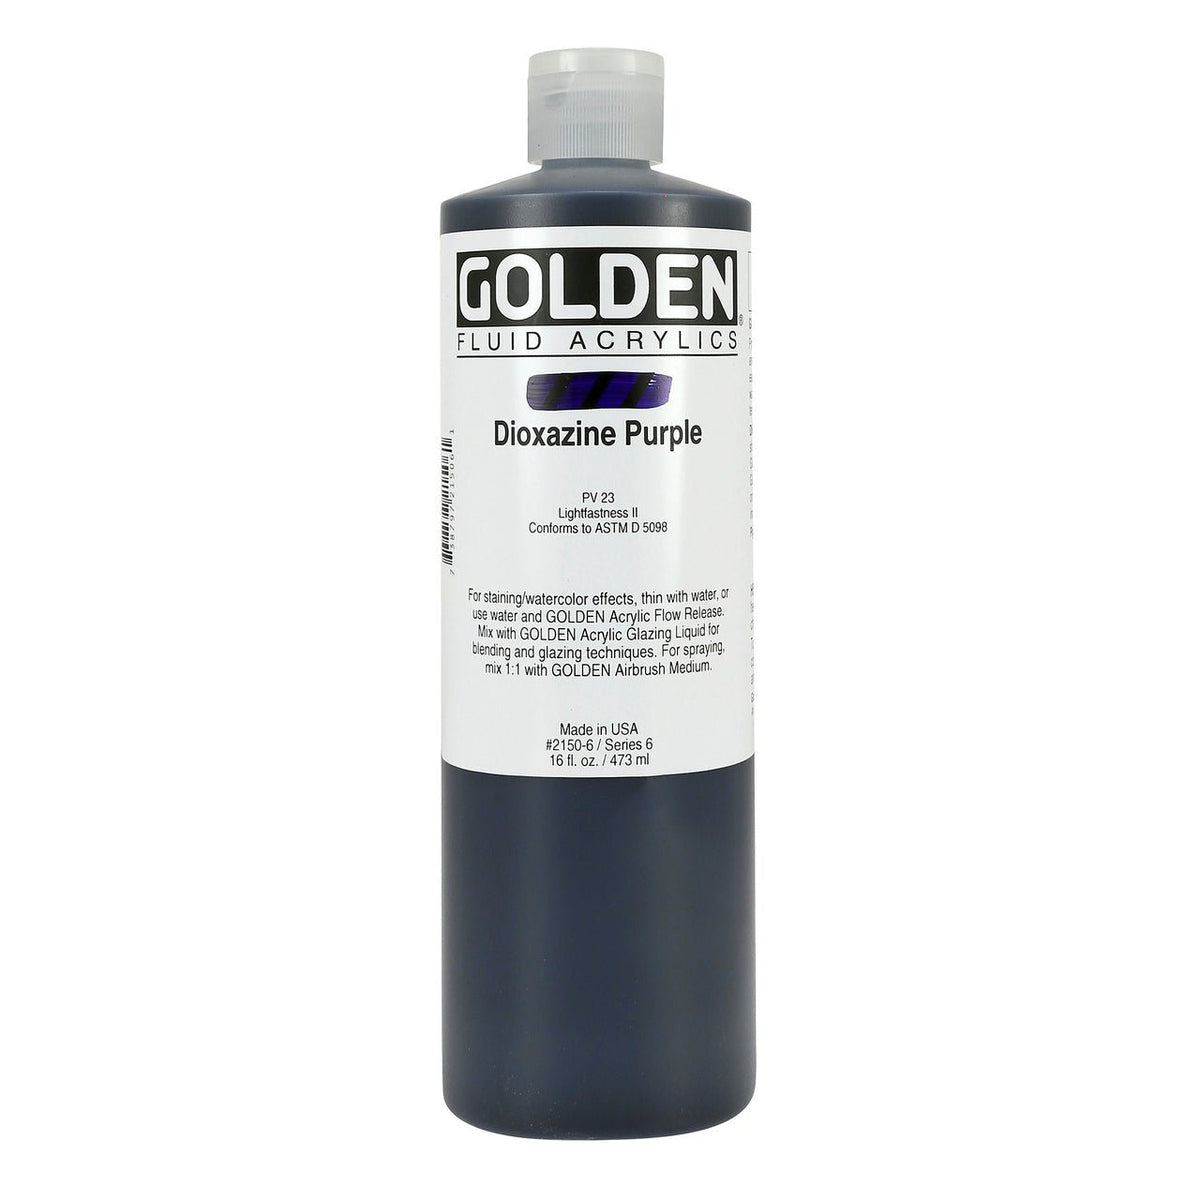 Golden Fluid Acrylic Dioxazine Purple 16 oz - merriartist.com